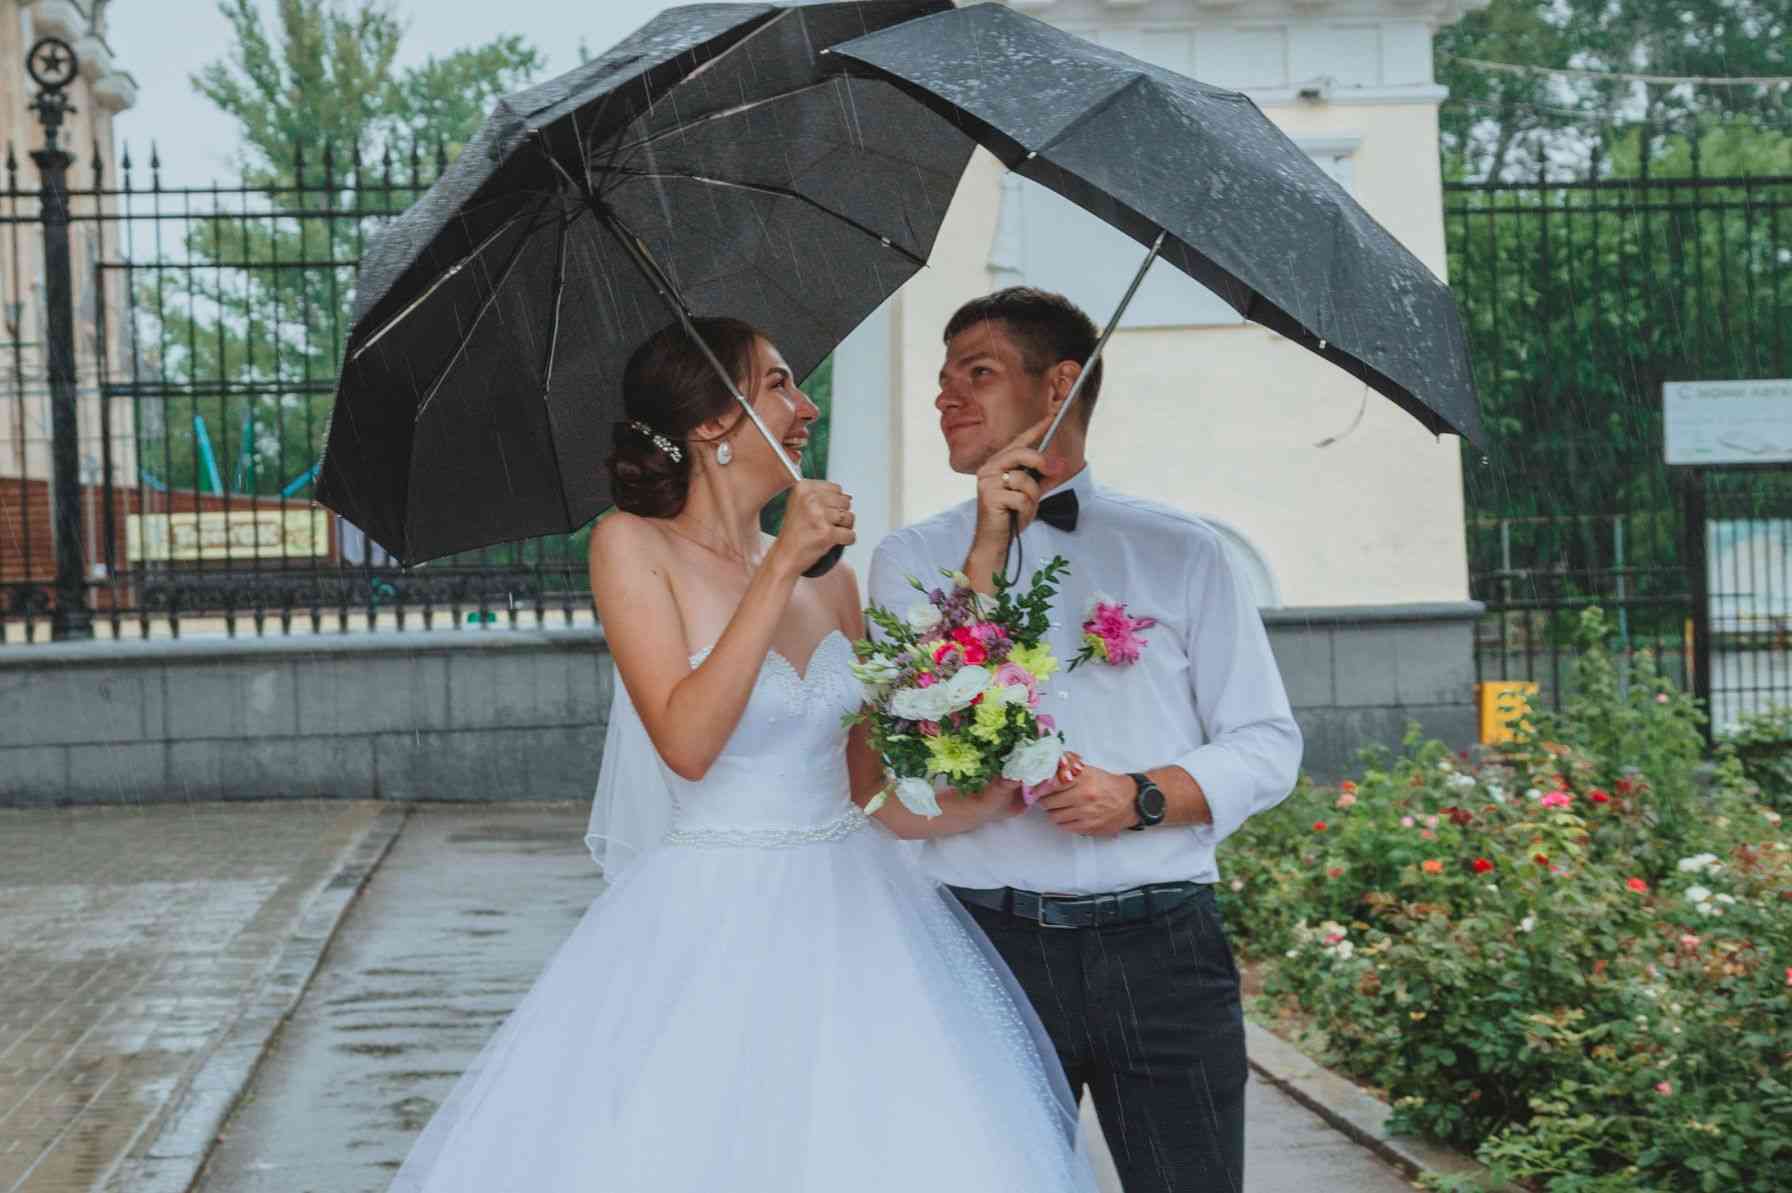 Wedding dress during rainy season